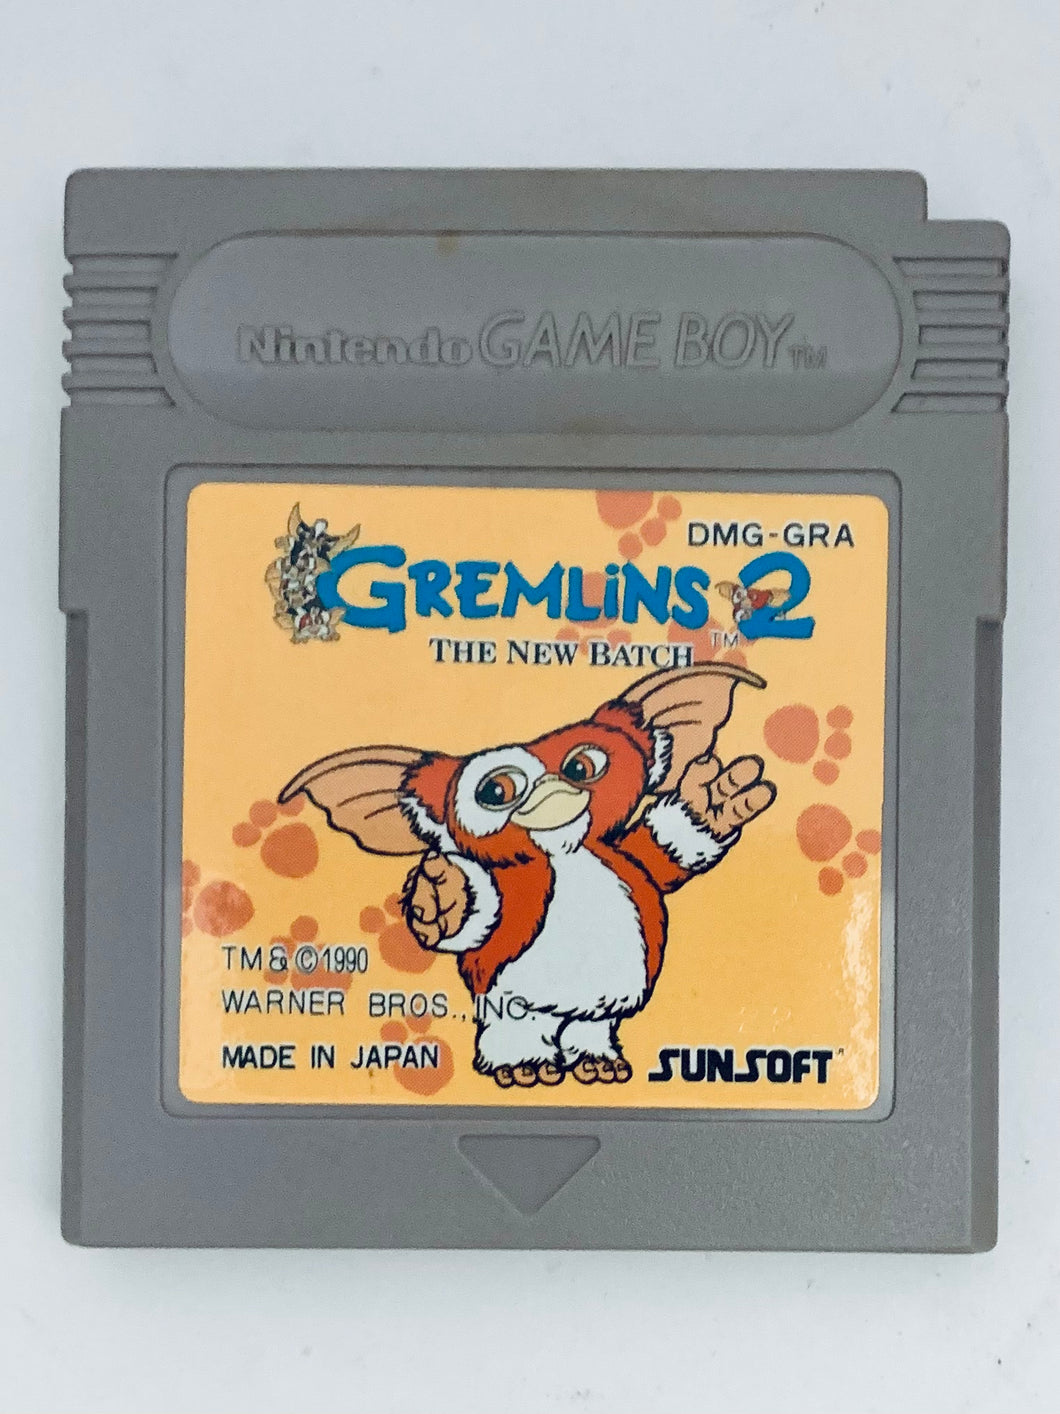 Gremlins 2: The New Batch - GameBoy - Game Boy - Pocket - GBC - GBA - JP - Cartridge (DMG-GRA)